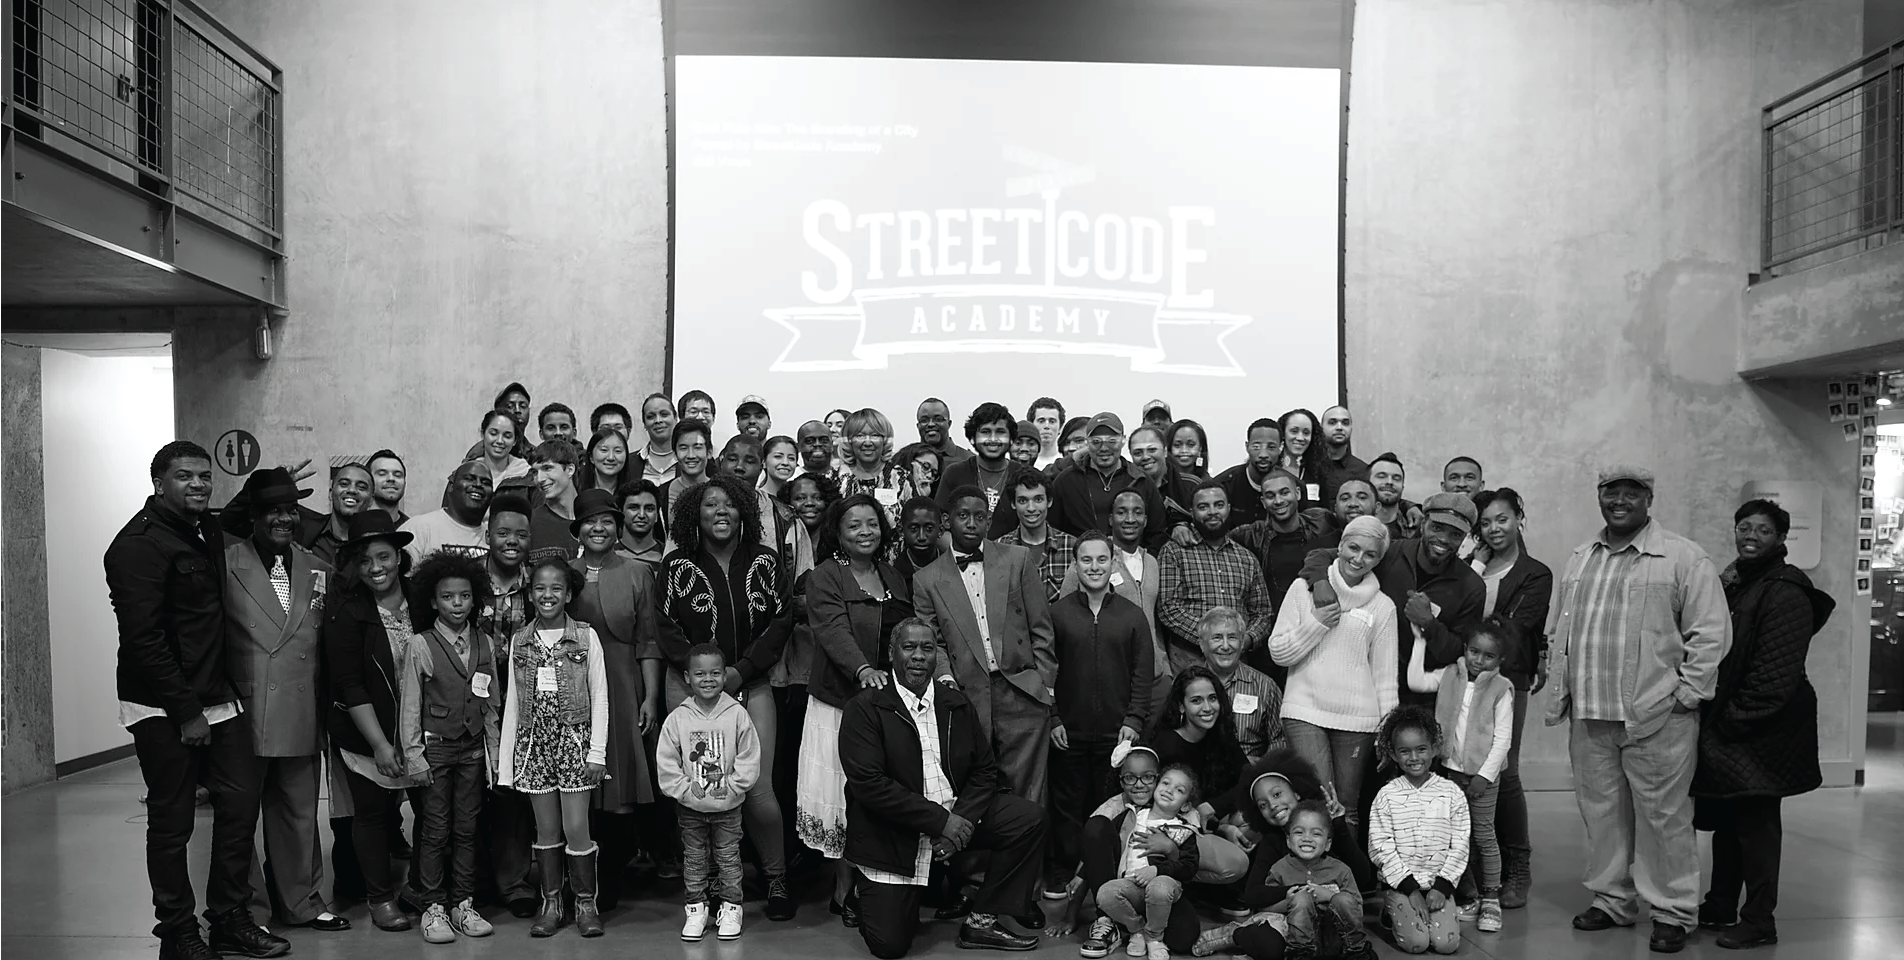 Streetcode Academy team photo